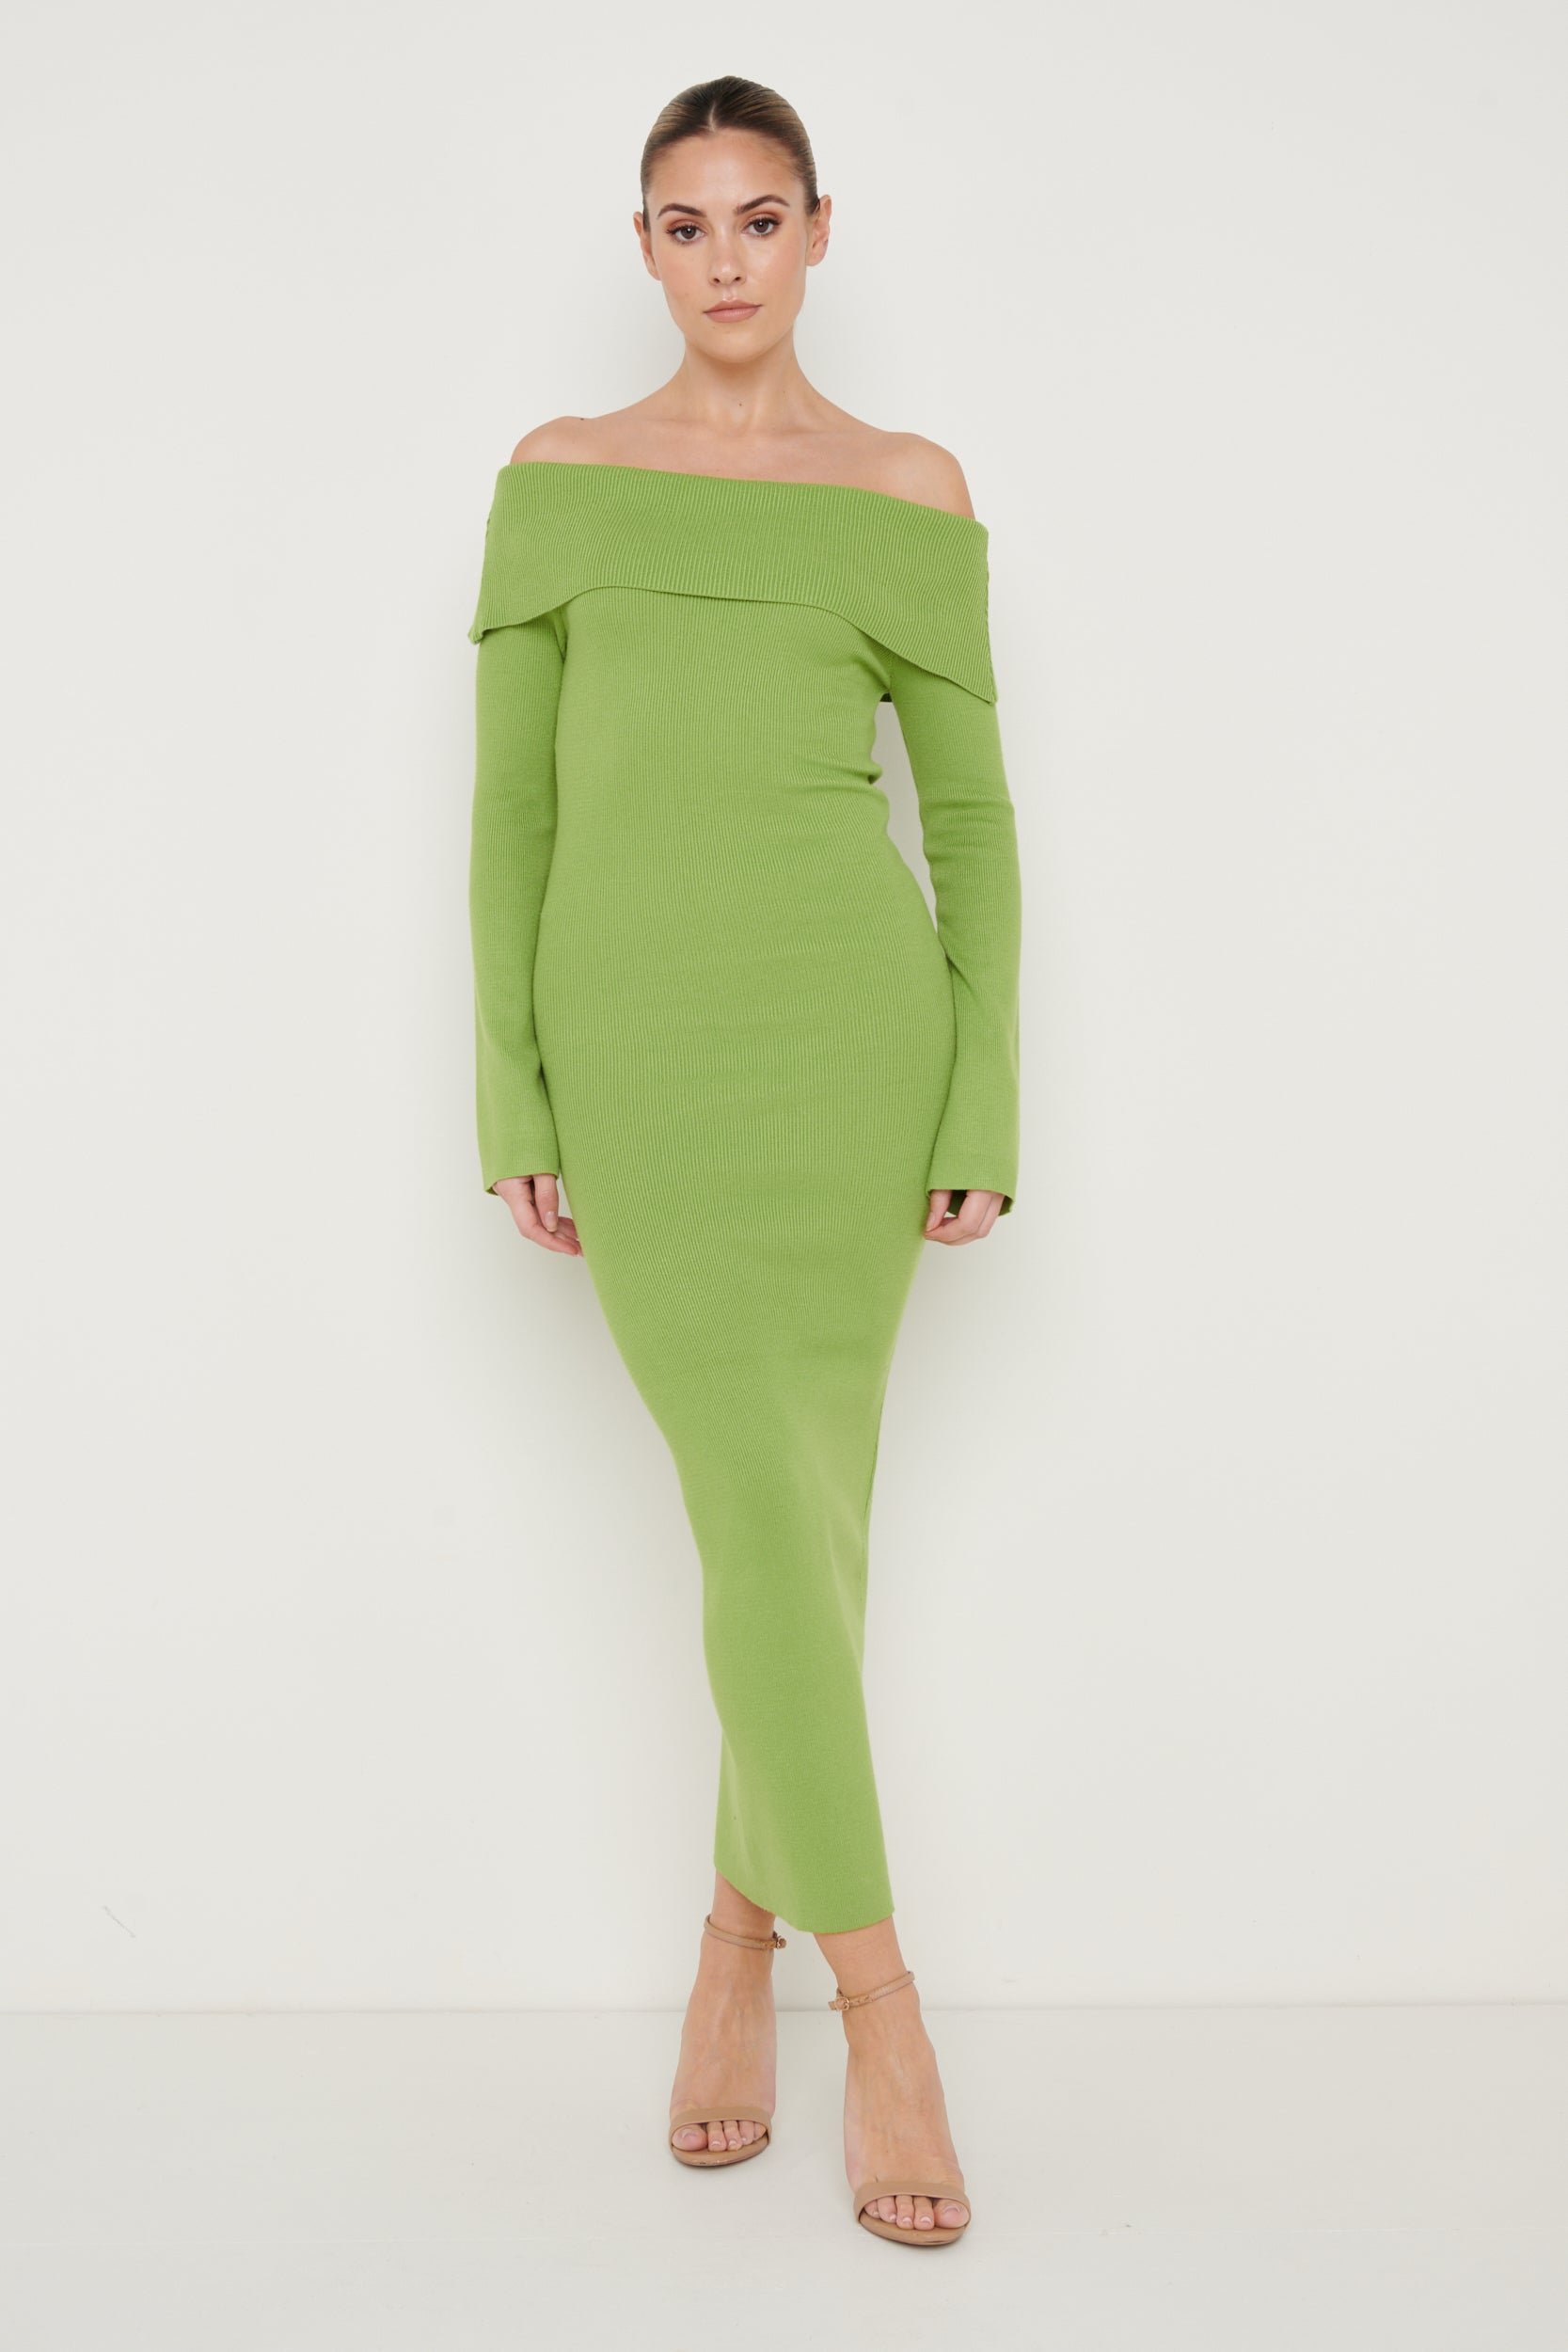 Soreya Bardot Knit Dress - Green, S